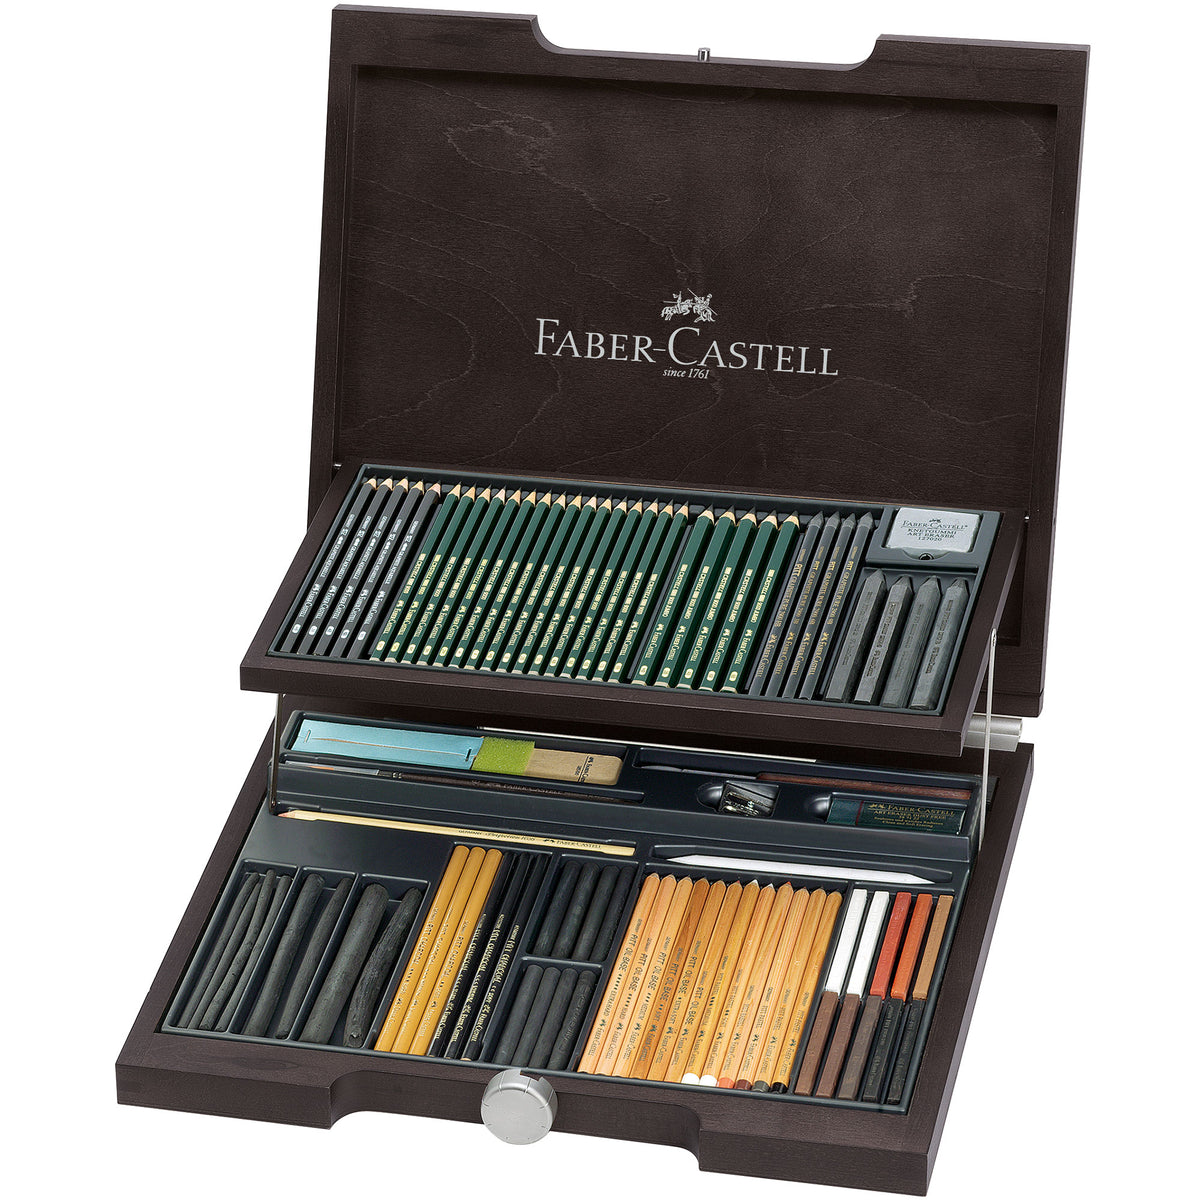 Faber-Castell Pitt Monochrome Wooden Case - 85 pieces